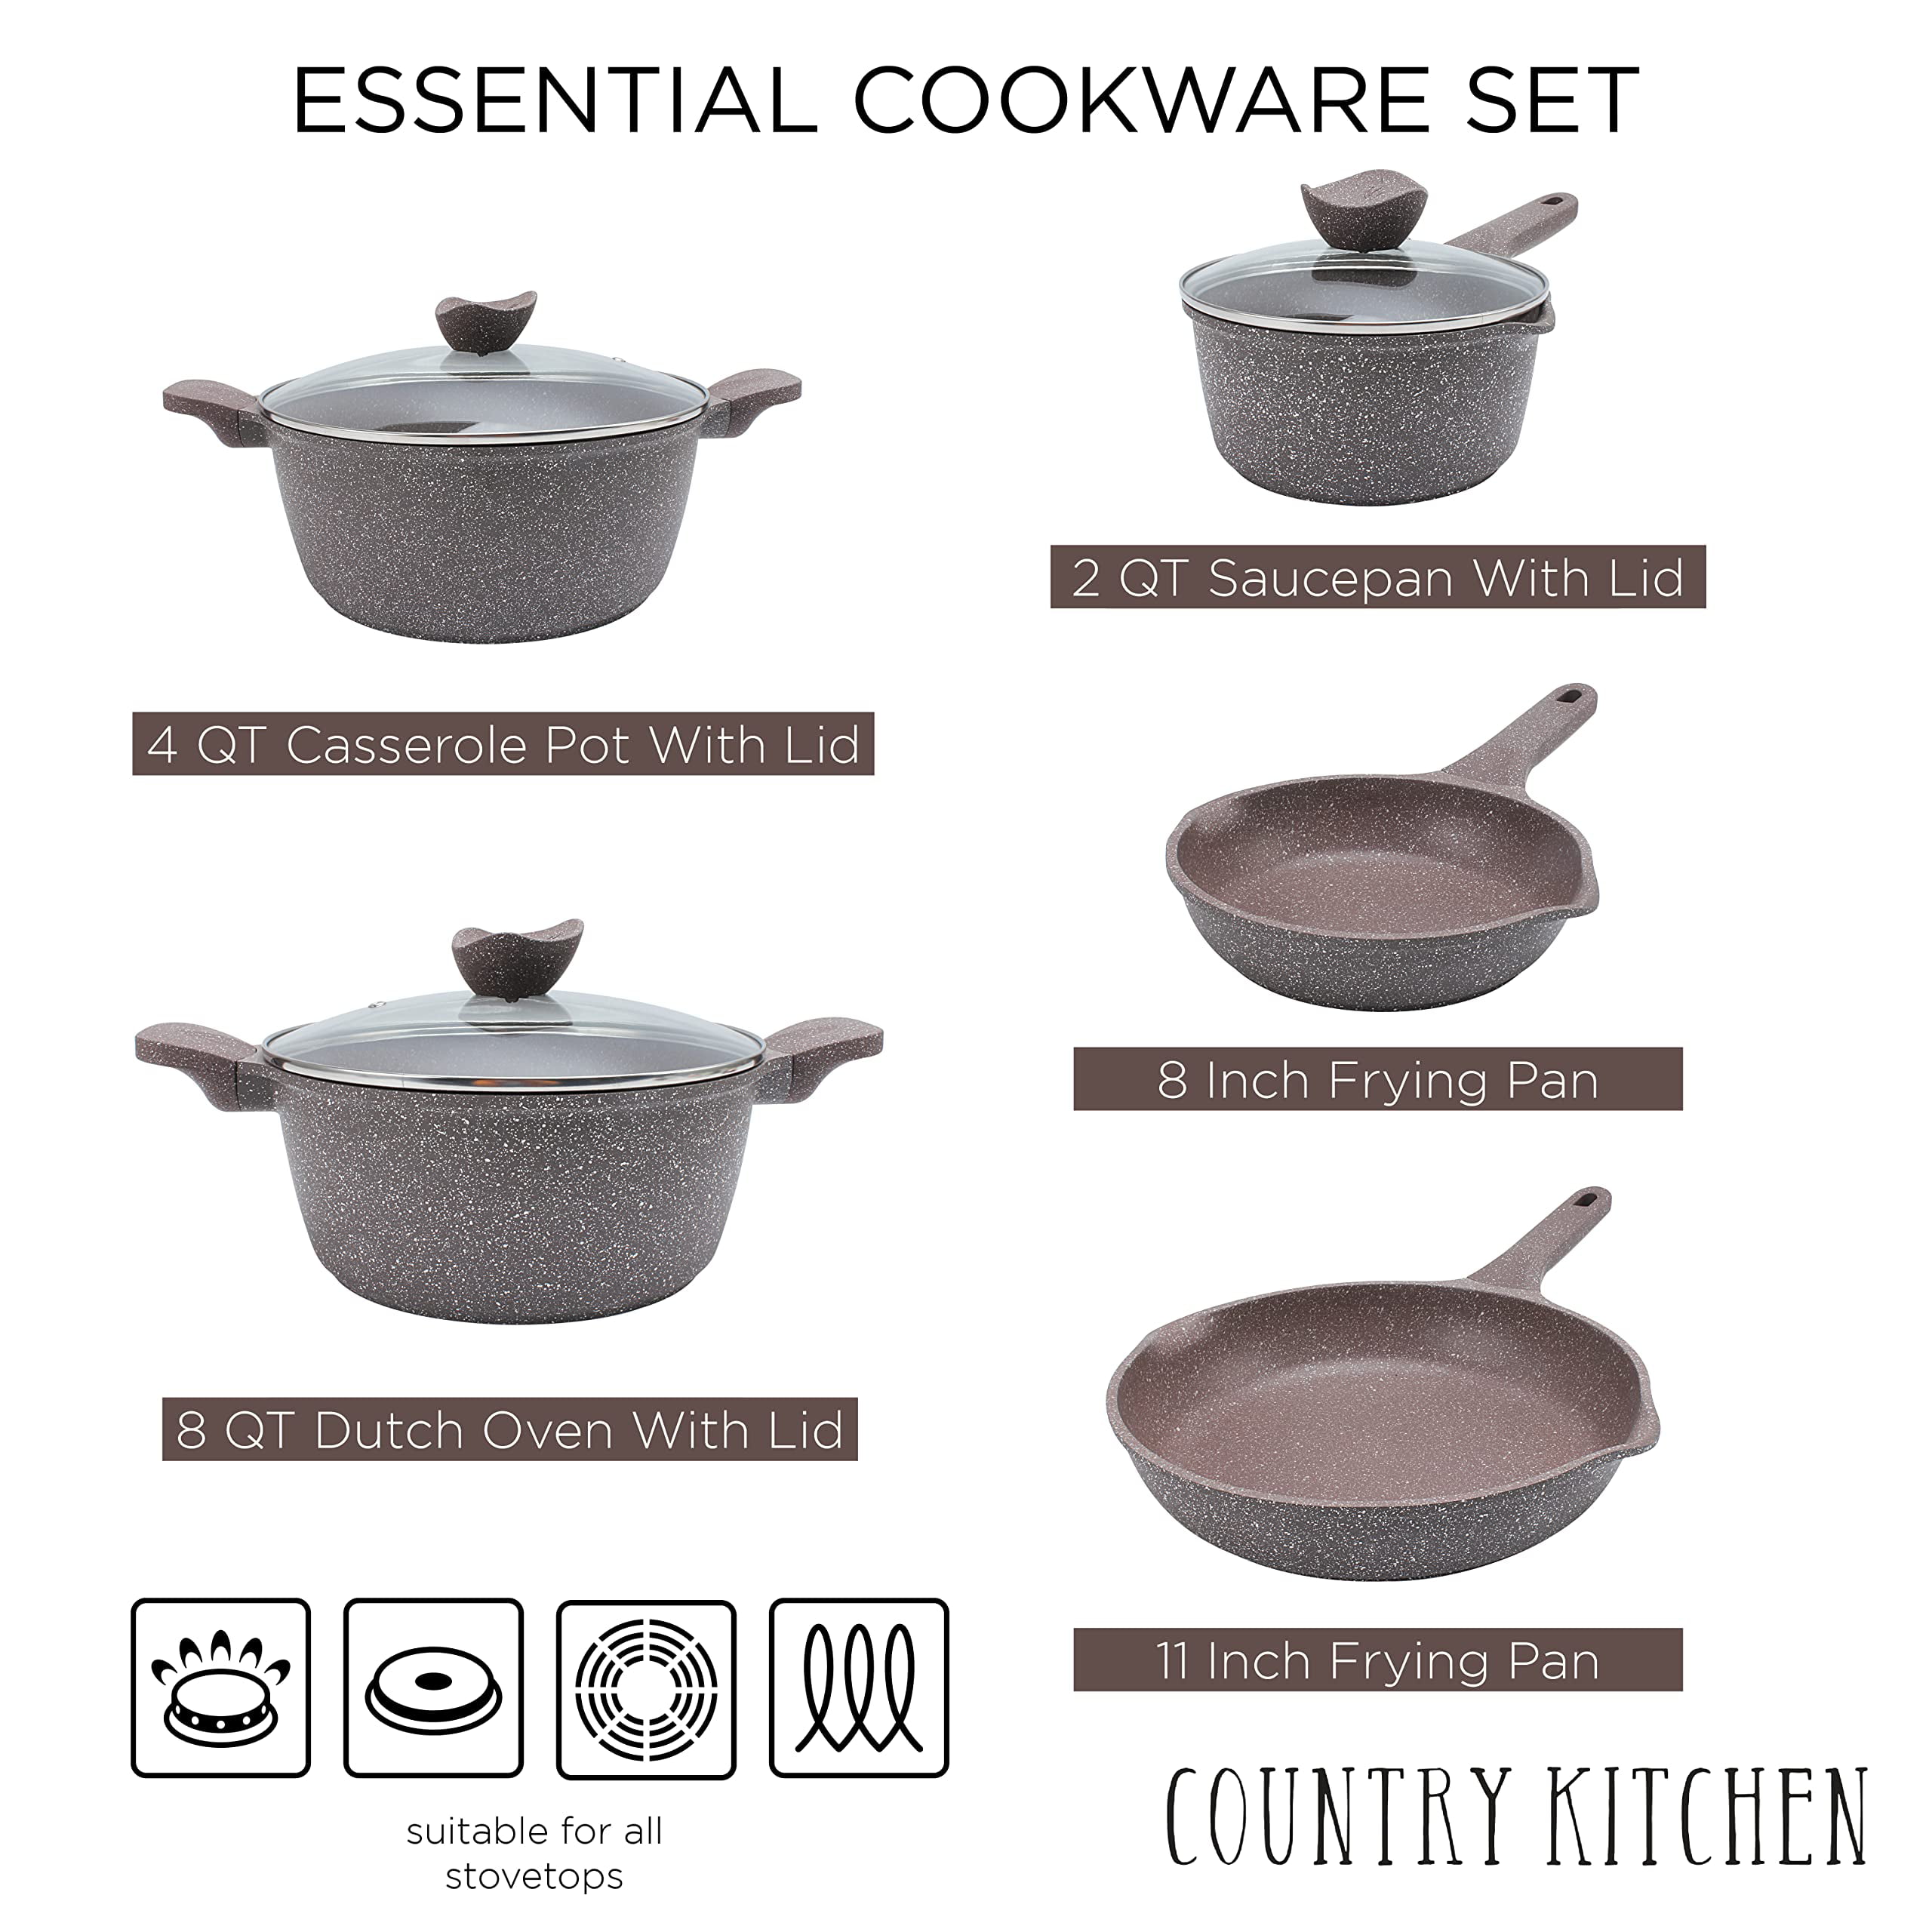 Country Kitchen 16-pc. Aluminum Nonstick Cookware Set with Detachable  Handles